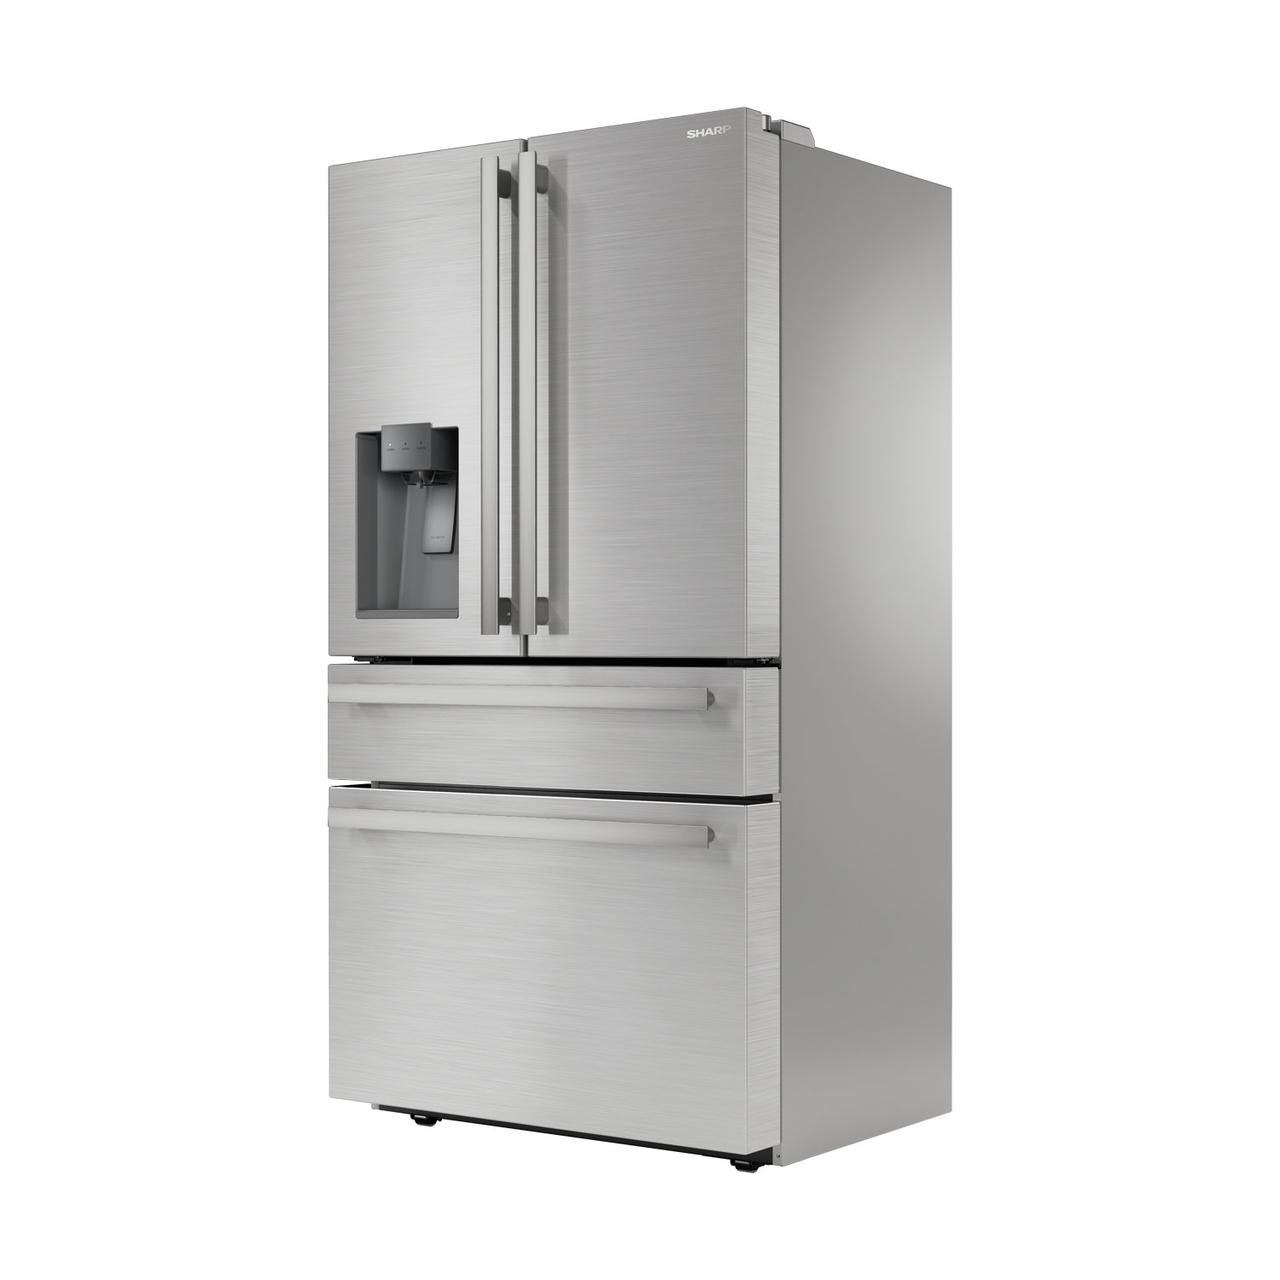 Sharp French 4-Door Counter-Depth Refrigerator with Water Dispenser